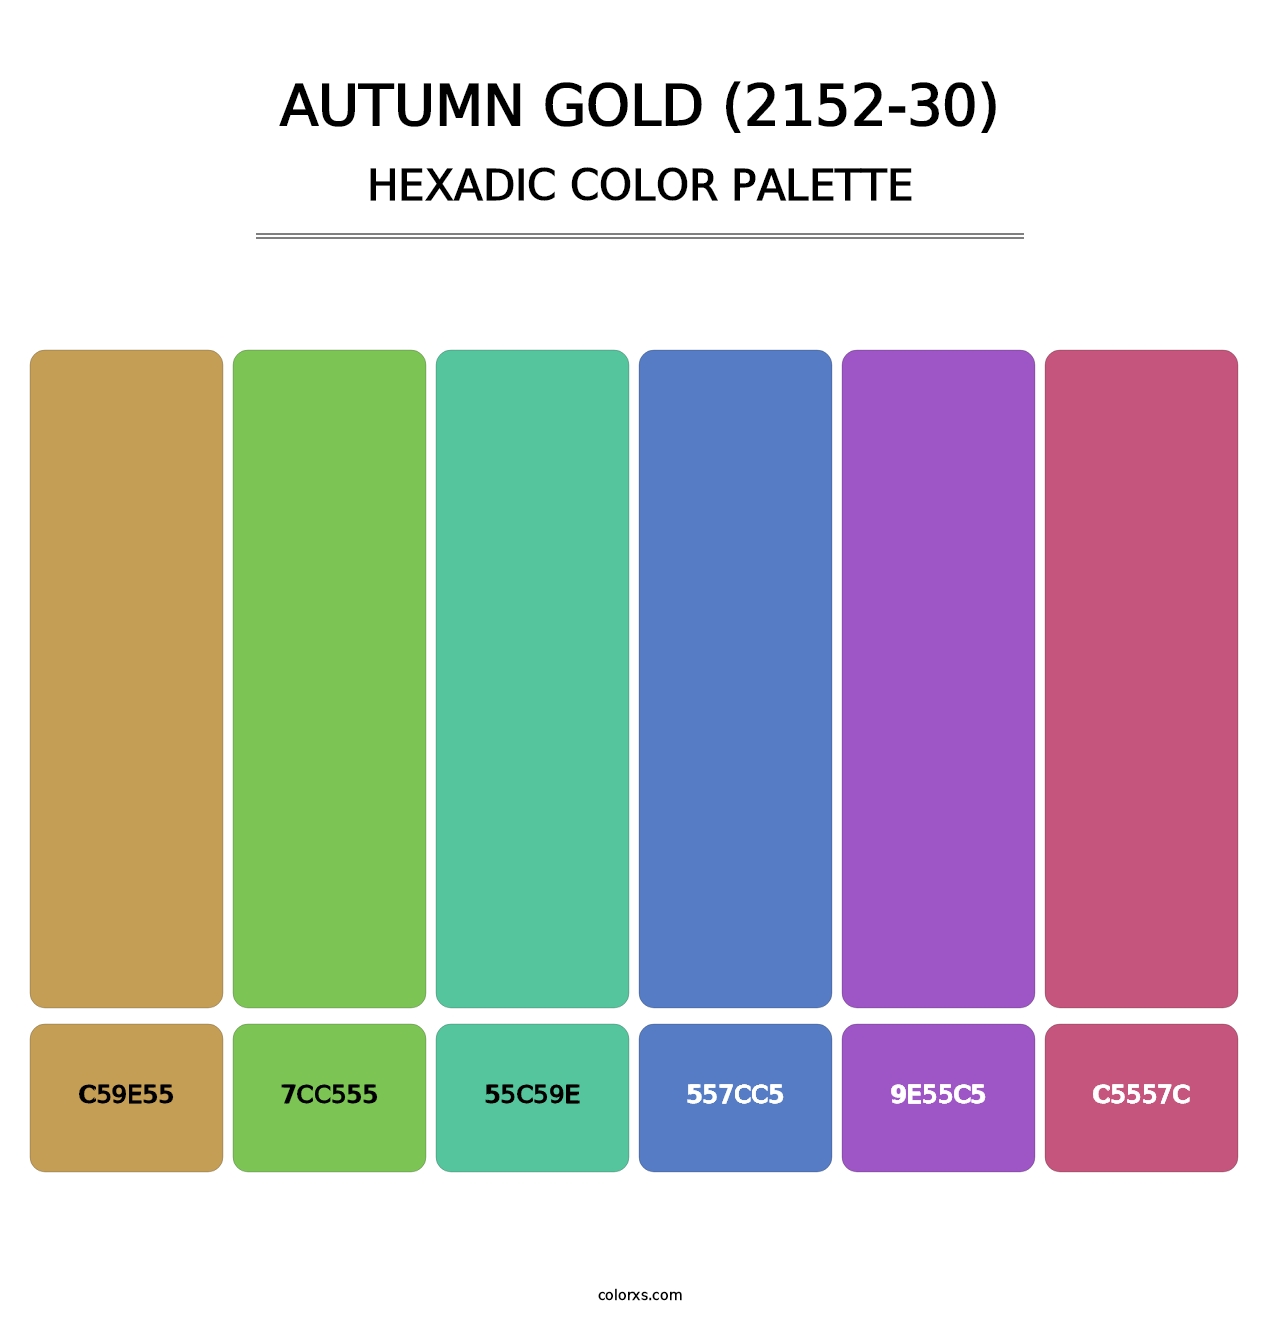 Autumn Gold (2152-30) - Hexadic Color Palette